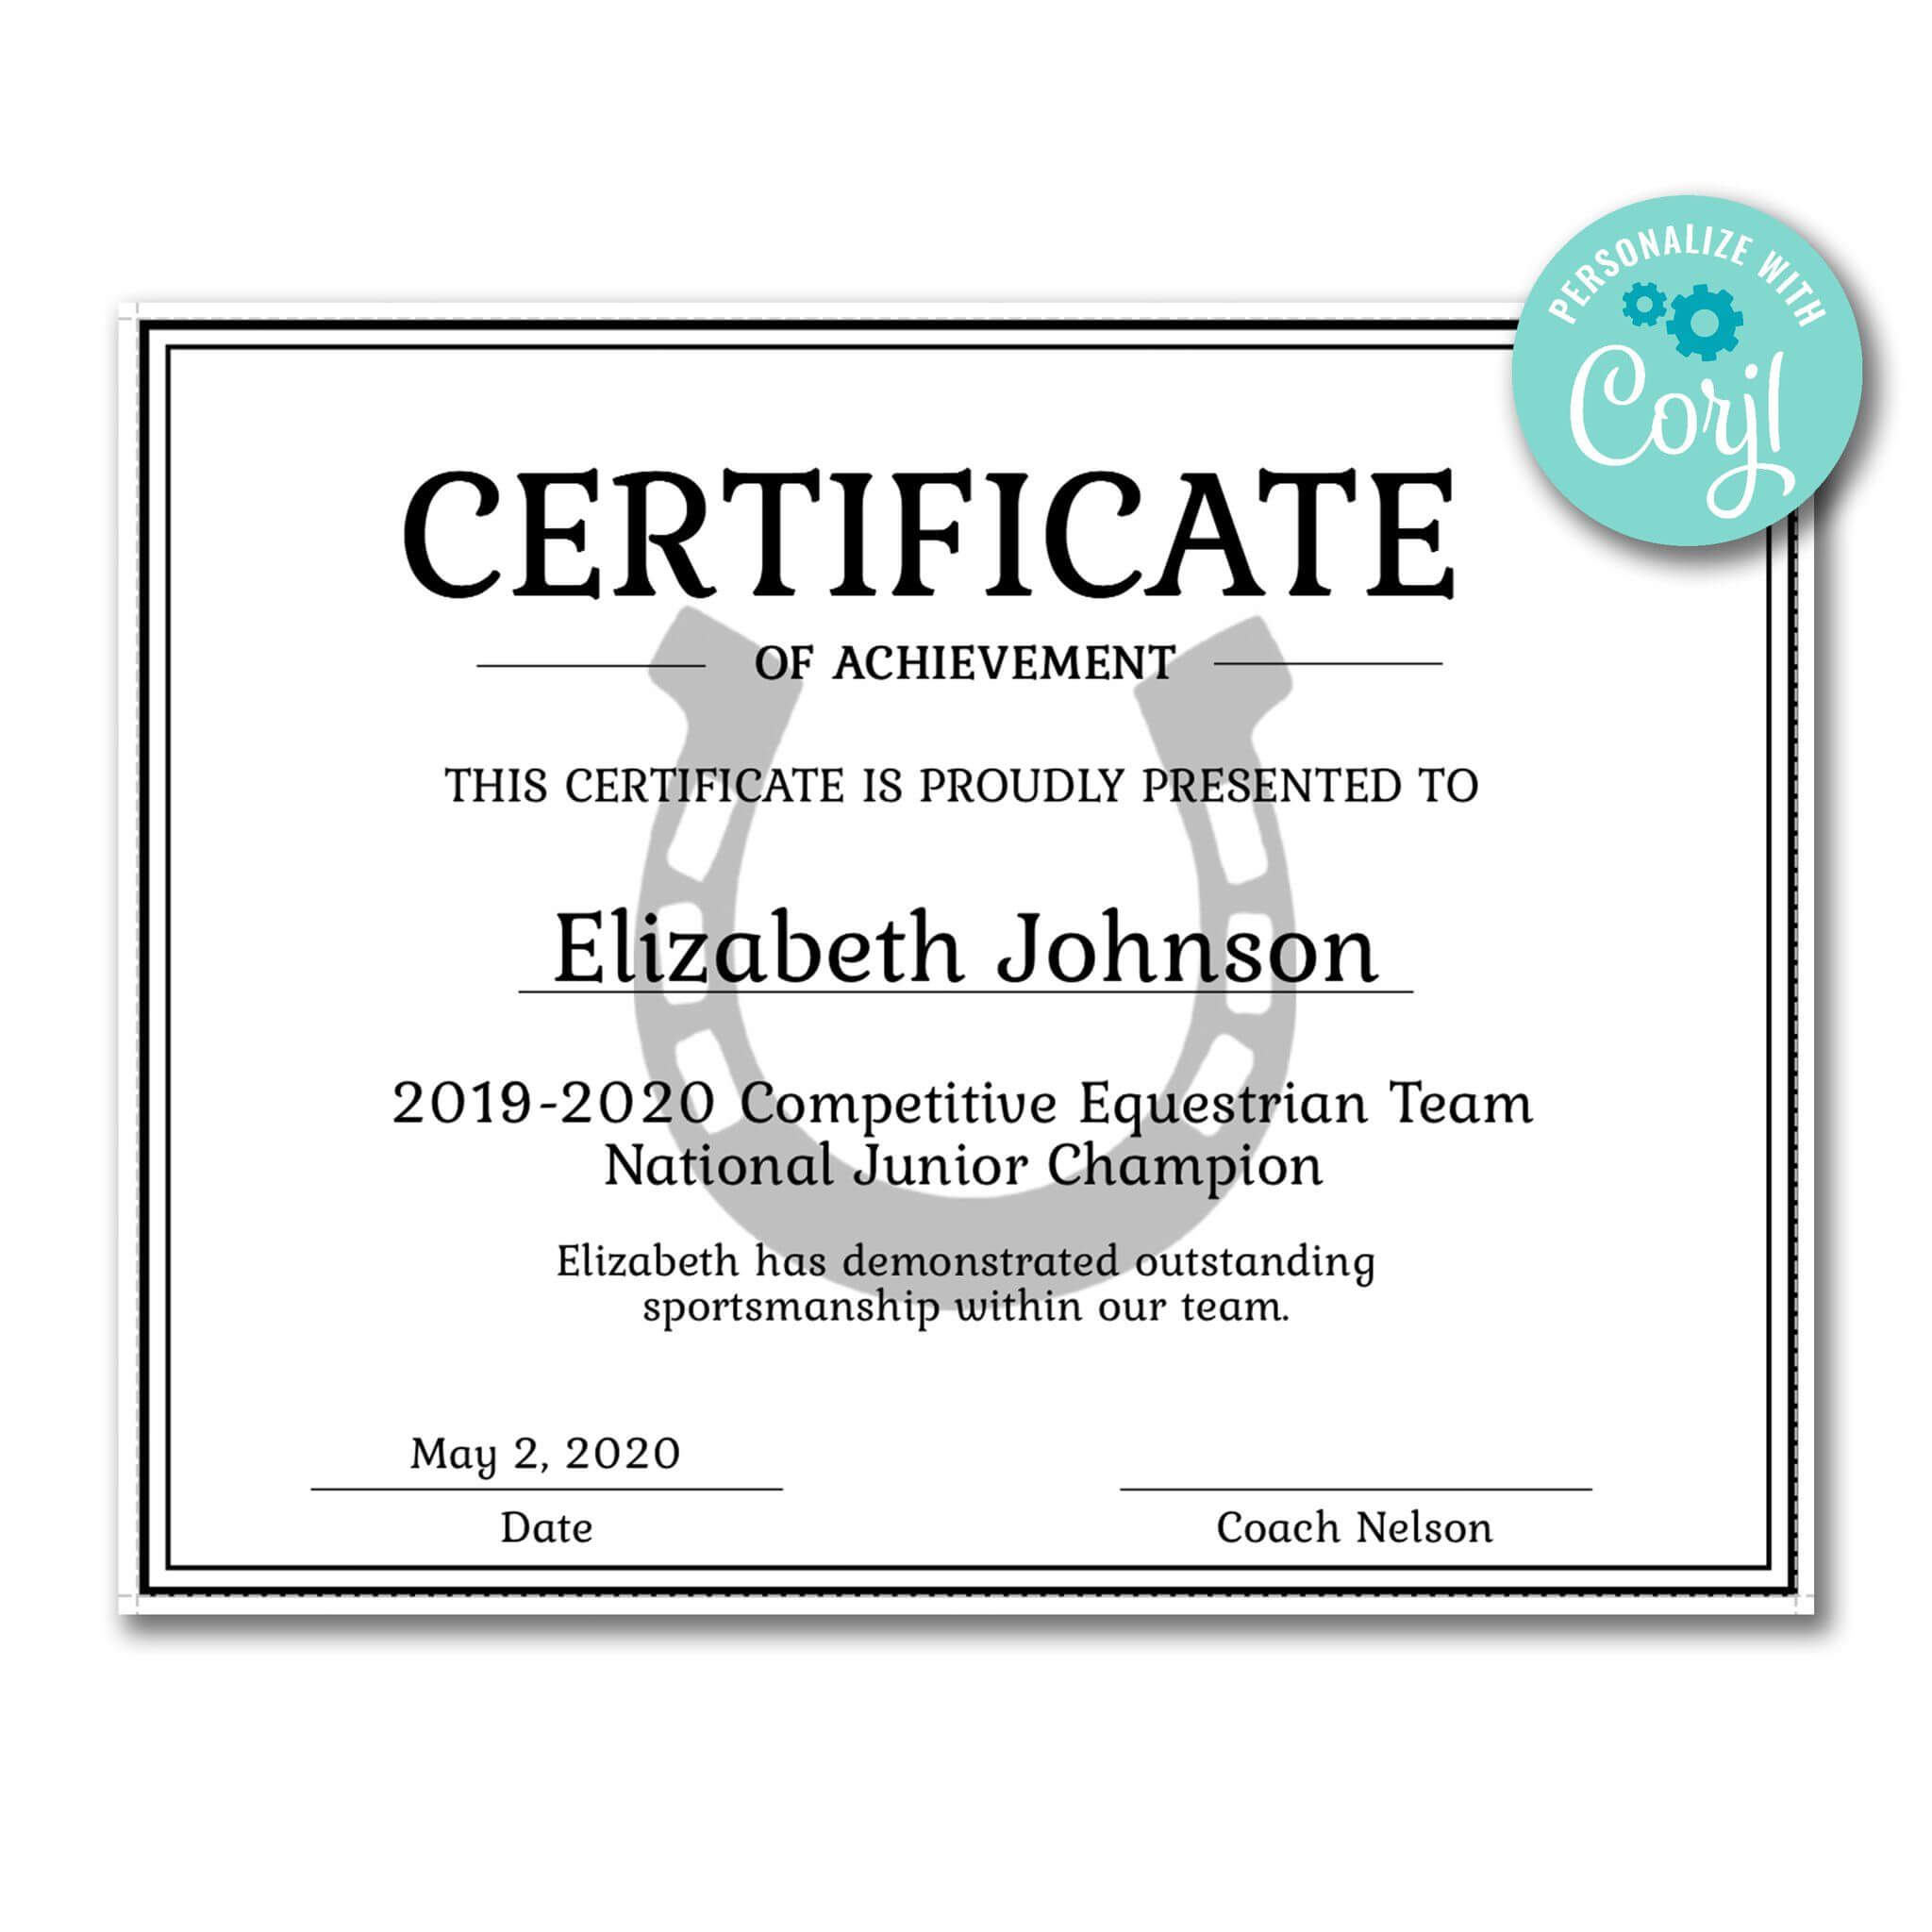 Horseshoe Certificate | Certificate Templates, Certificate Throughout Softball Certificate Templates